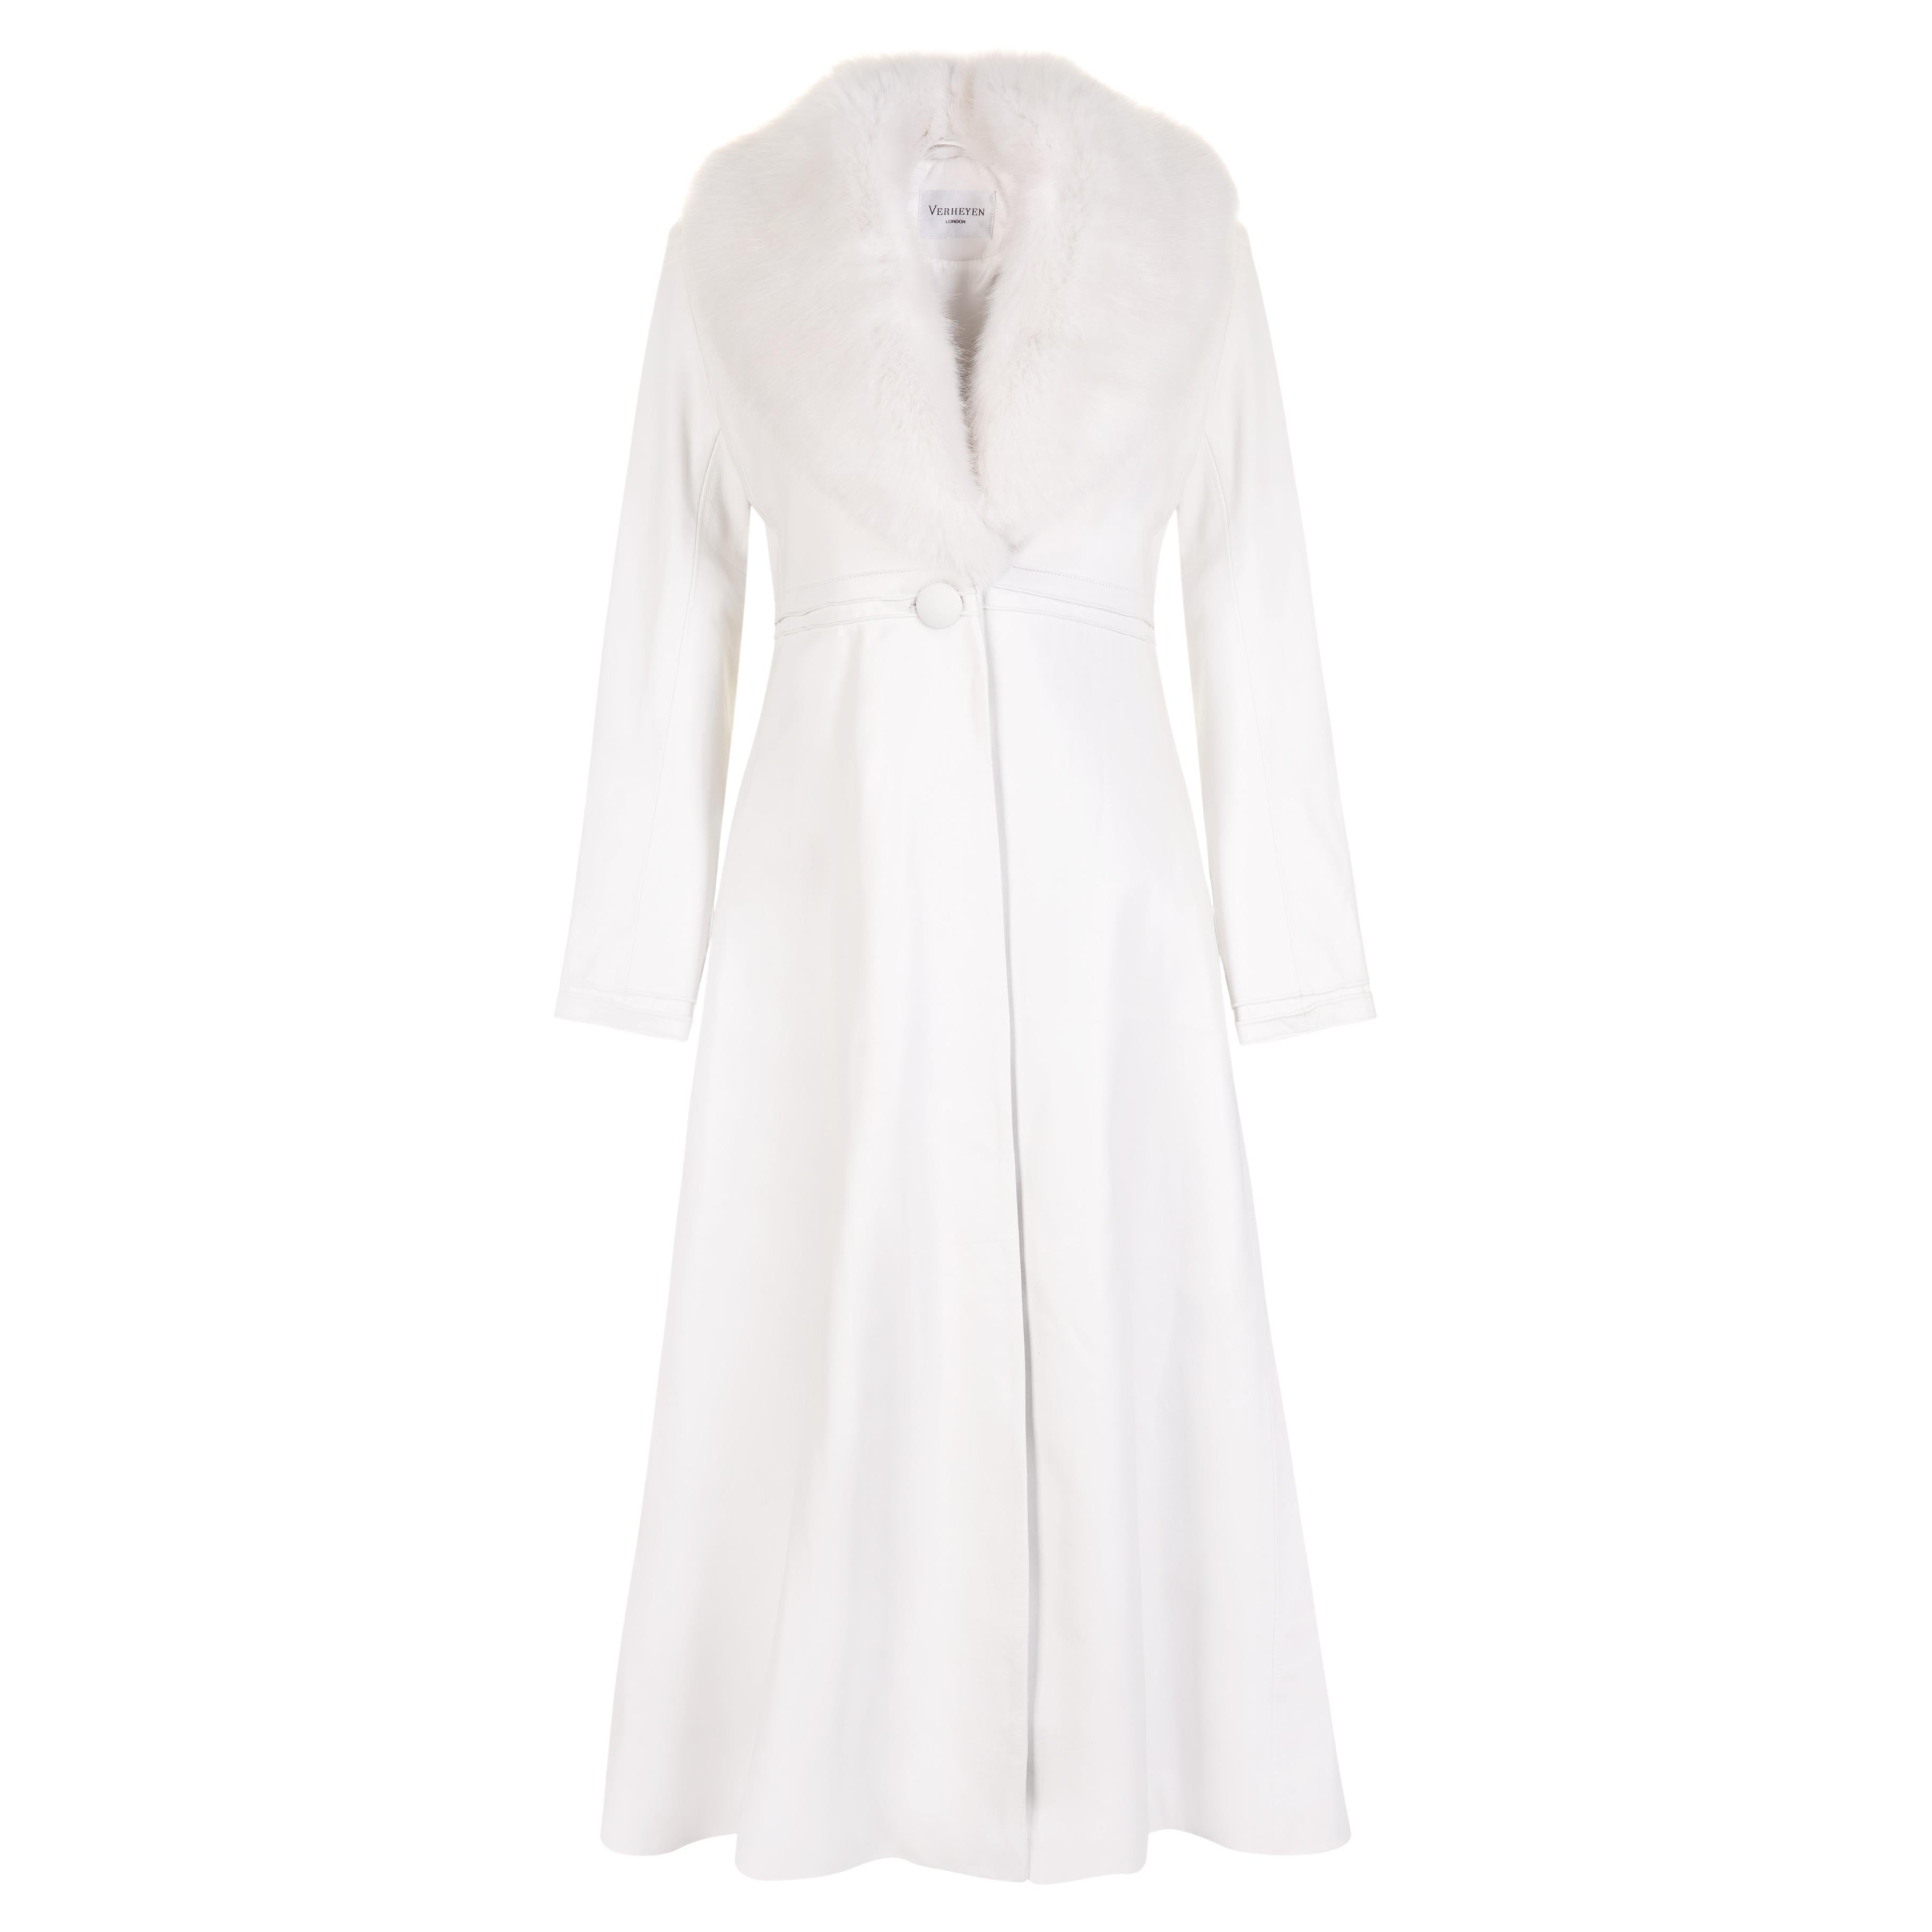 Verheyen London Edward Leather Coat in White with Faux Fur - Size uk 14 